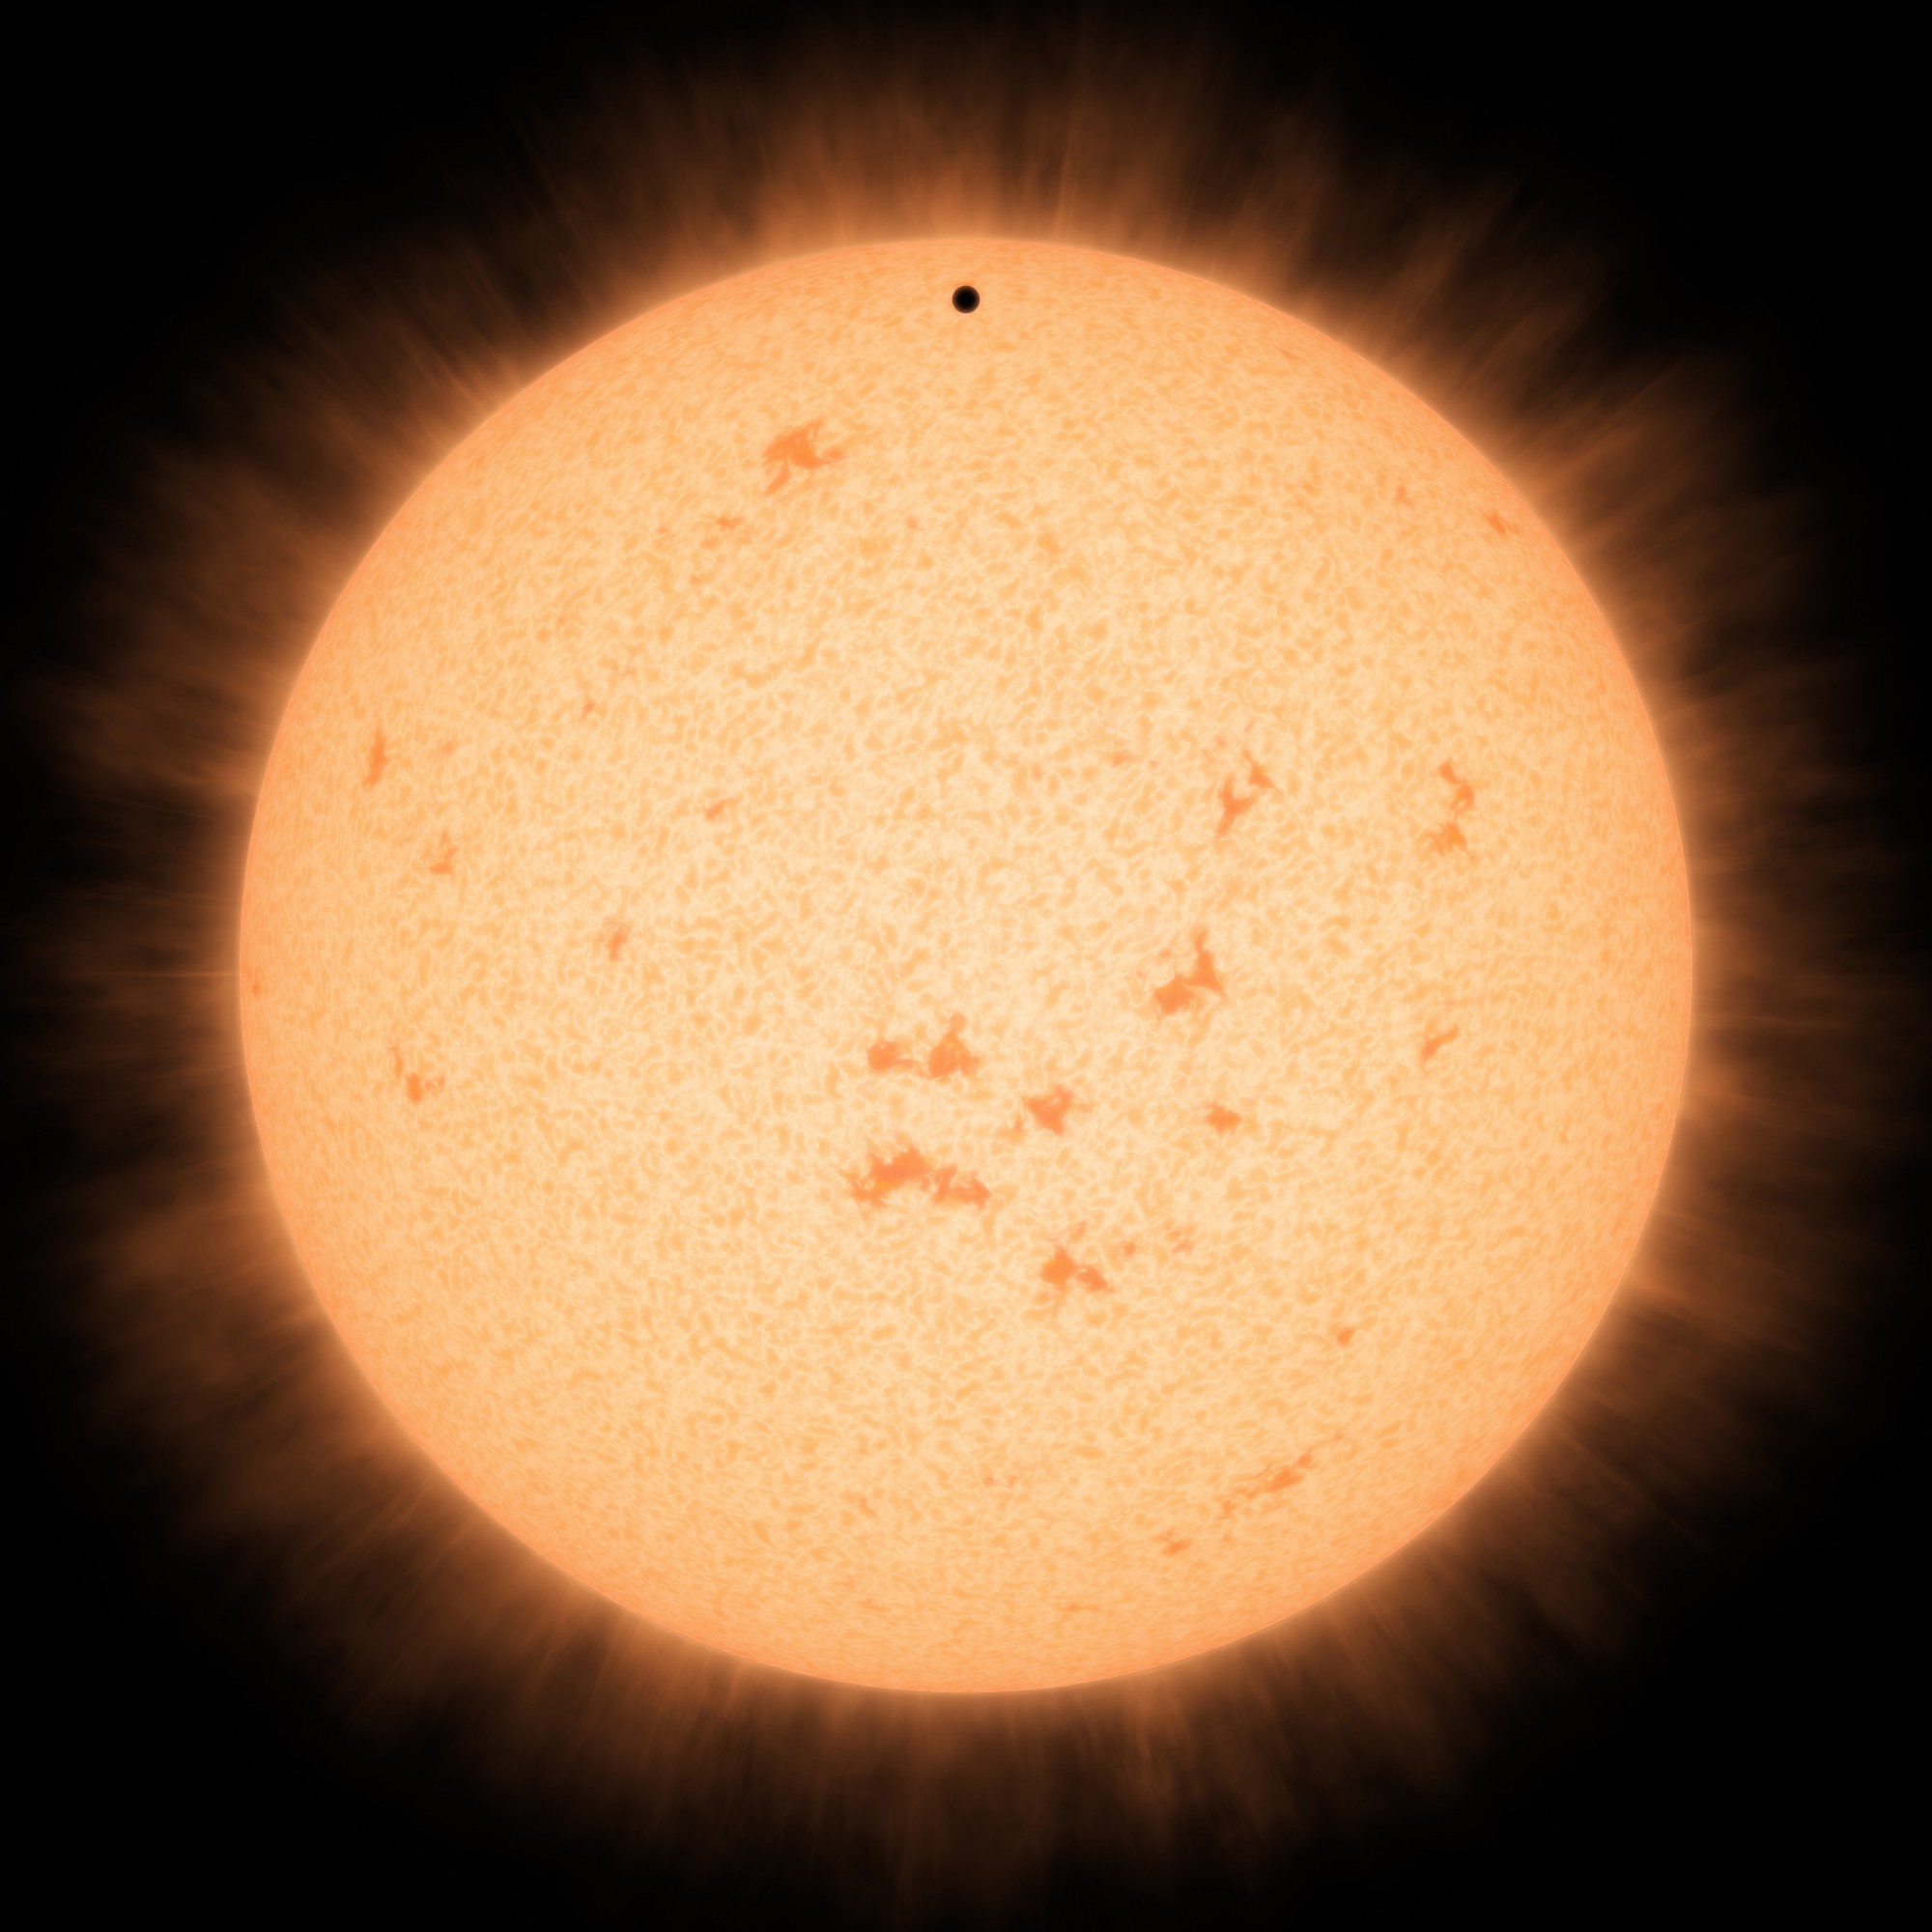 Image: NASA/JPL-Caltech